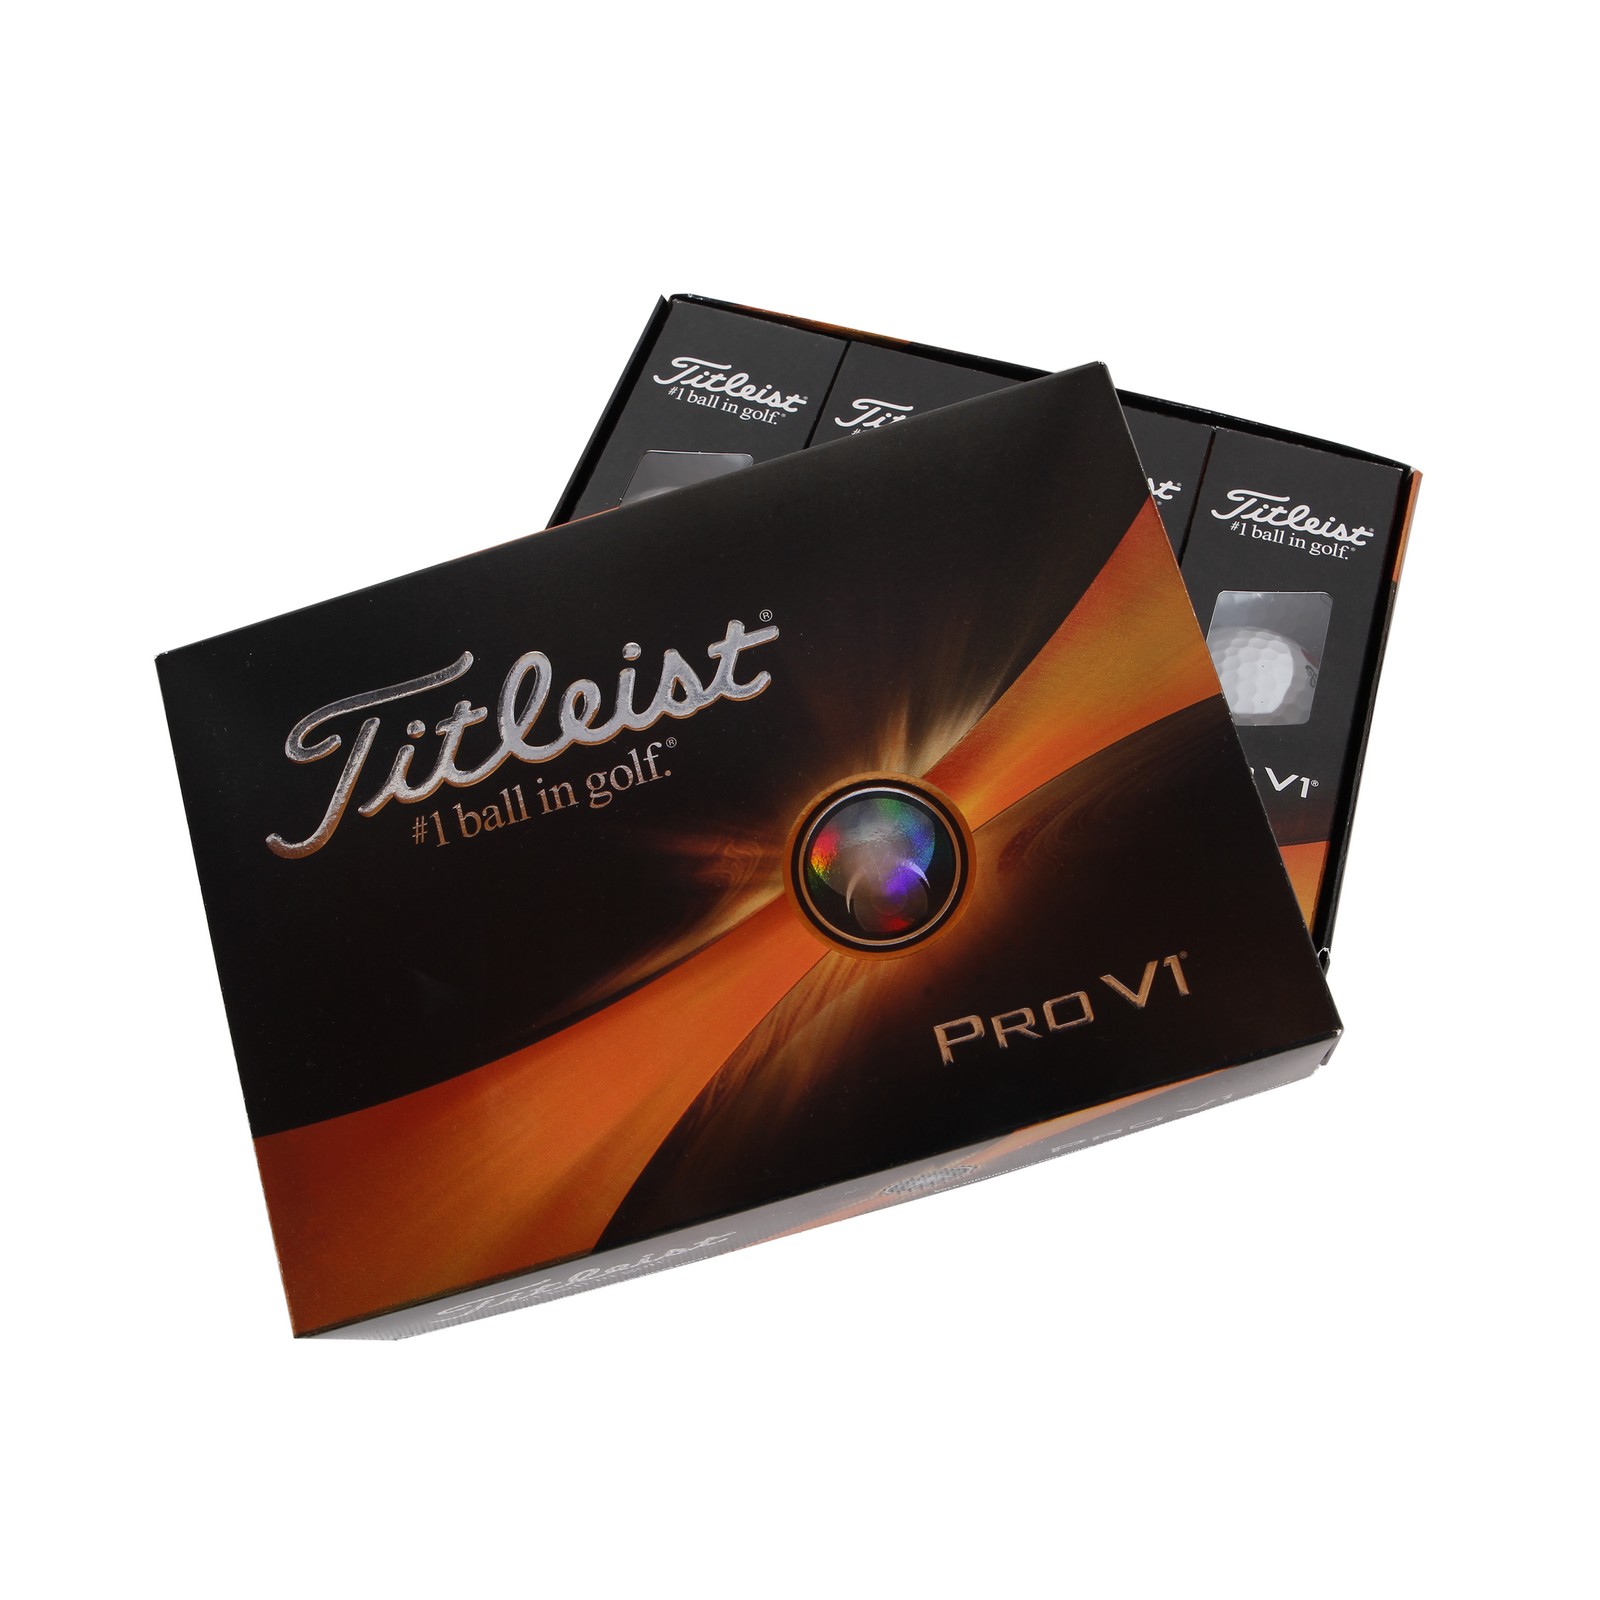 Pilsner Urquell Titleist Pro V1 golf balls